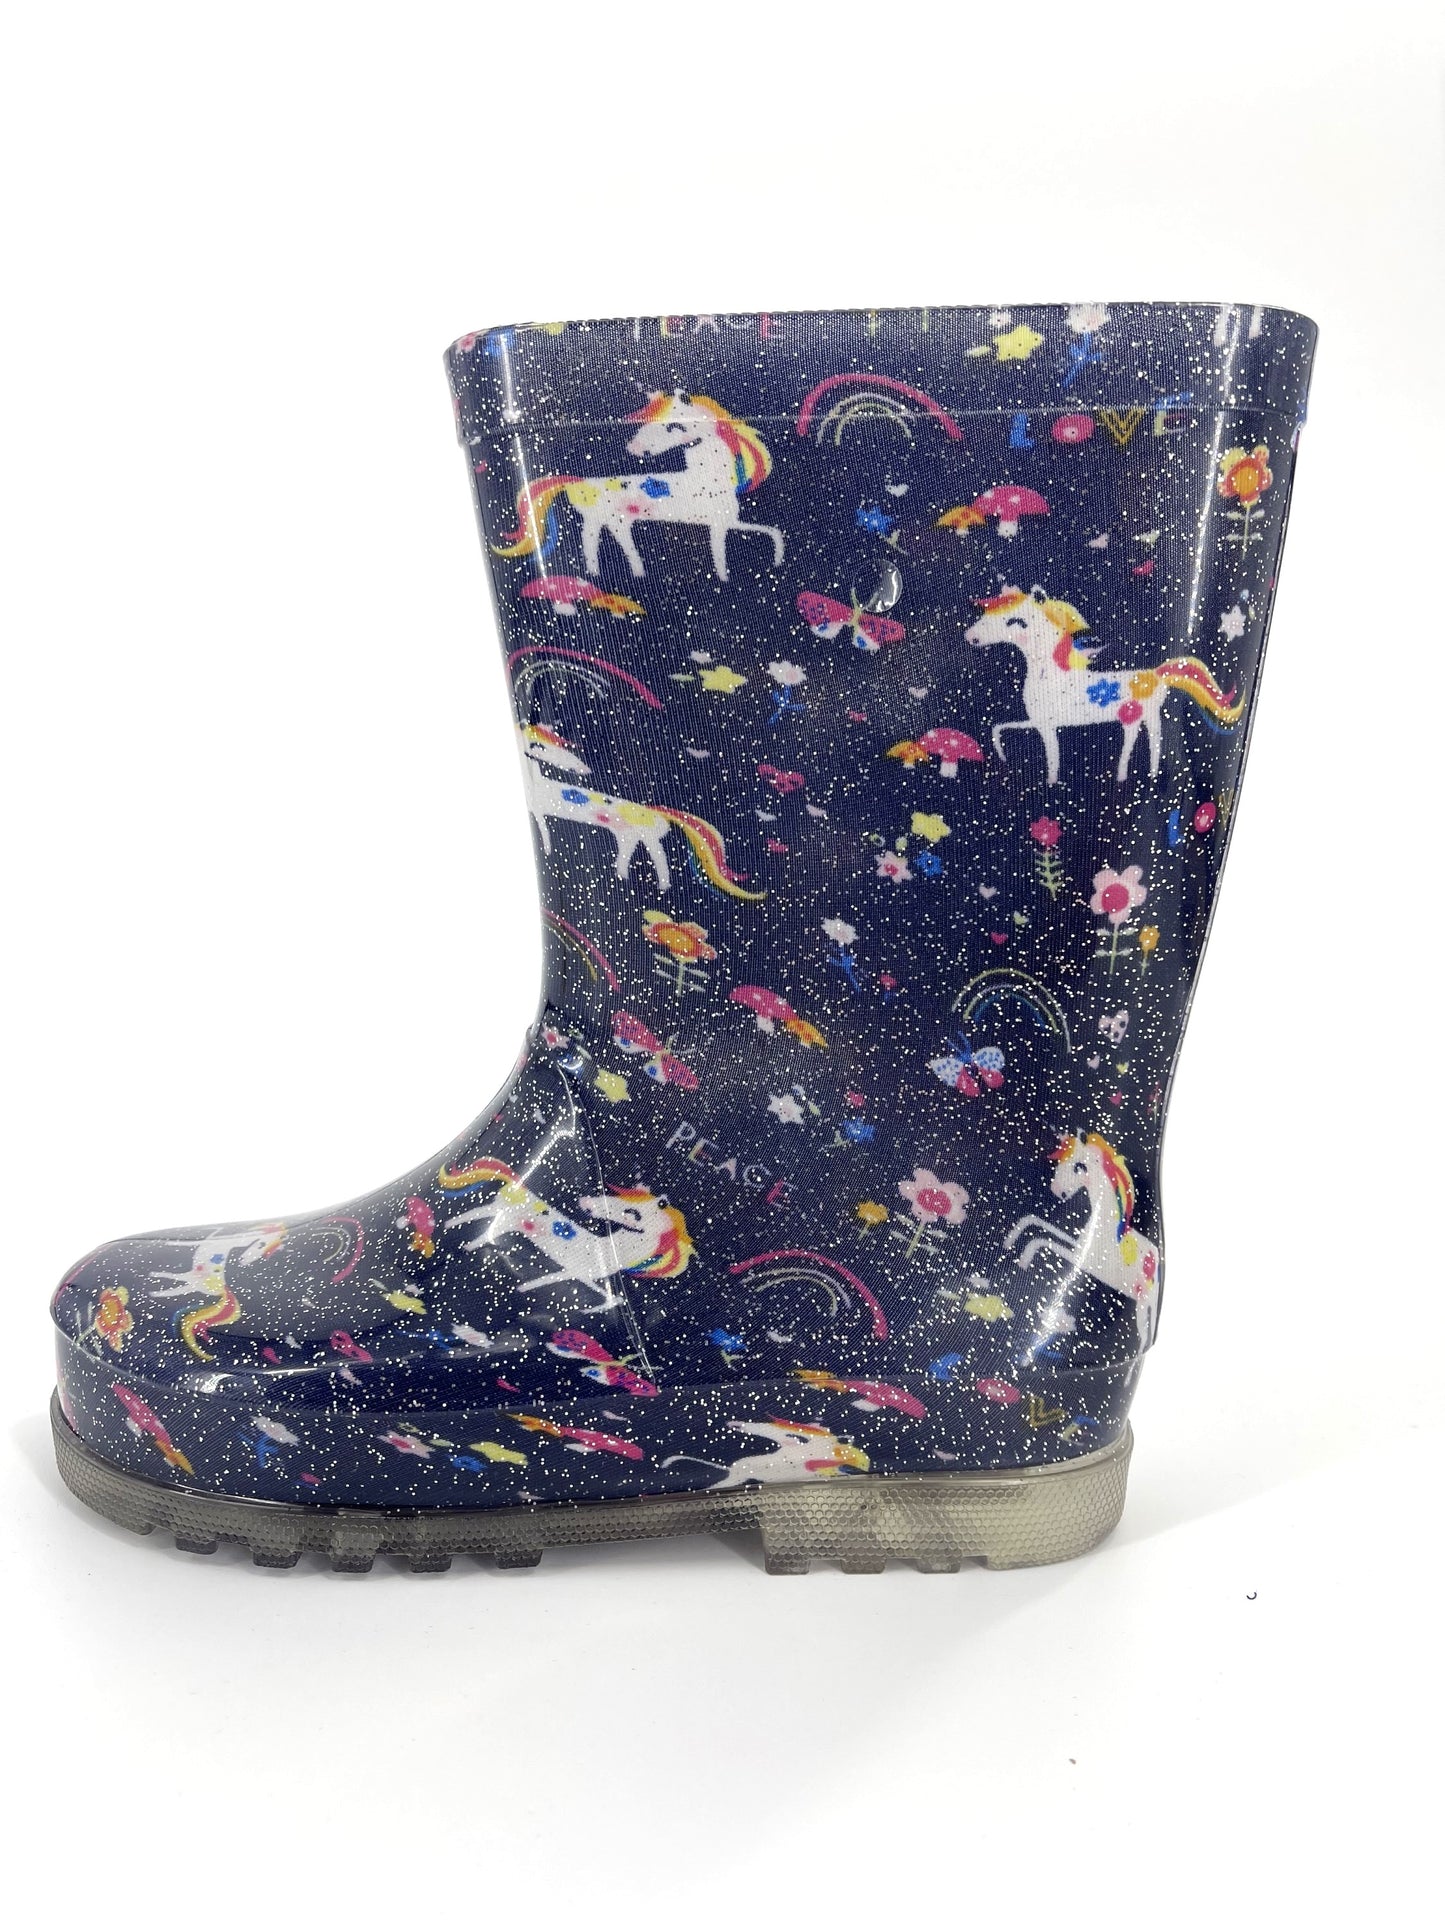 Girls Glitter Unicorn Wellies Wellington Boots with Flashing Light Soles